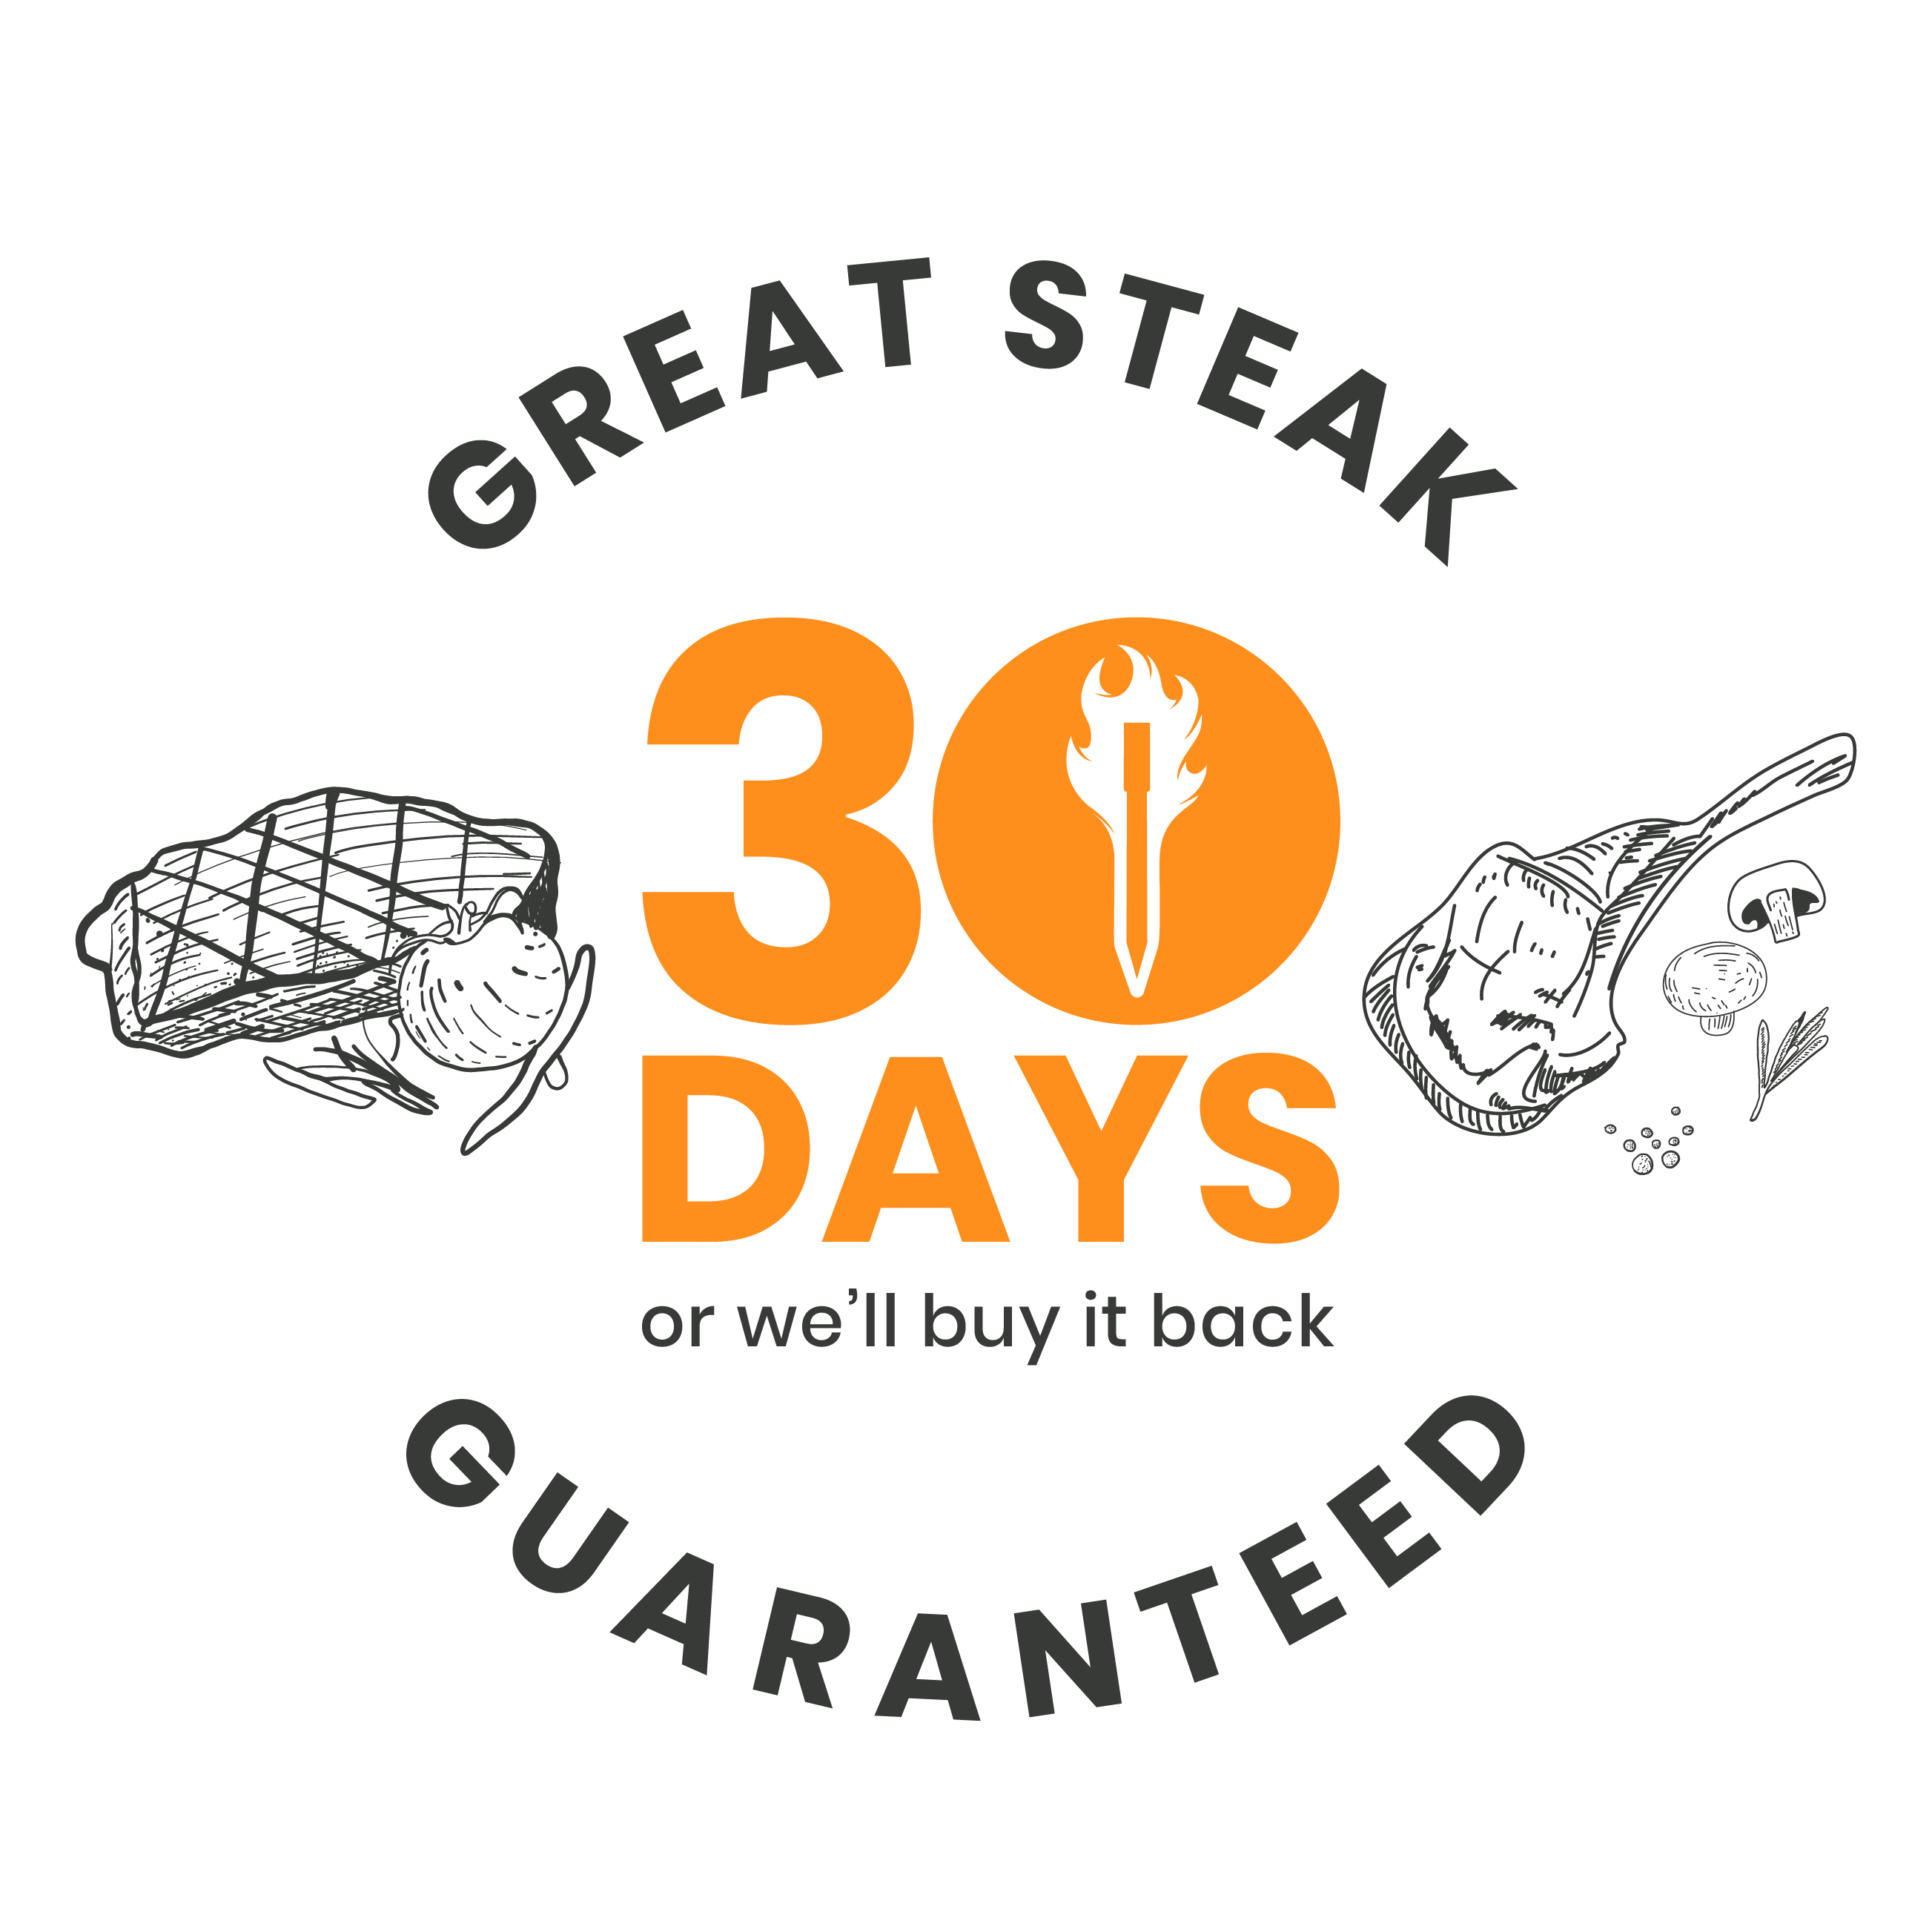 The MeatStick Great Steak Guarantee